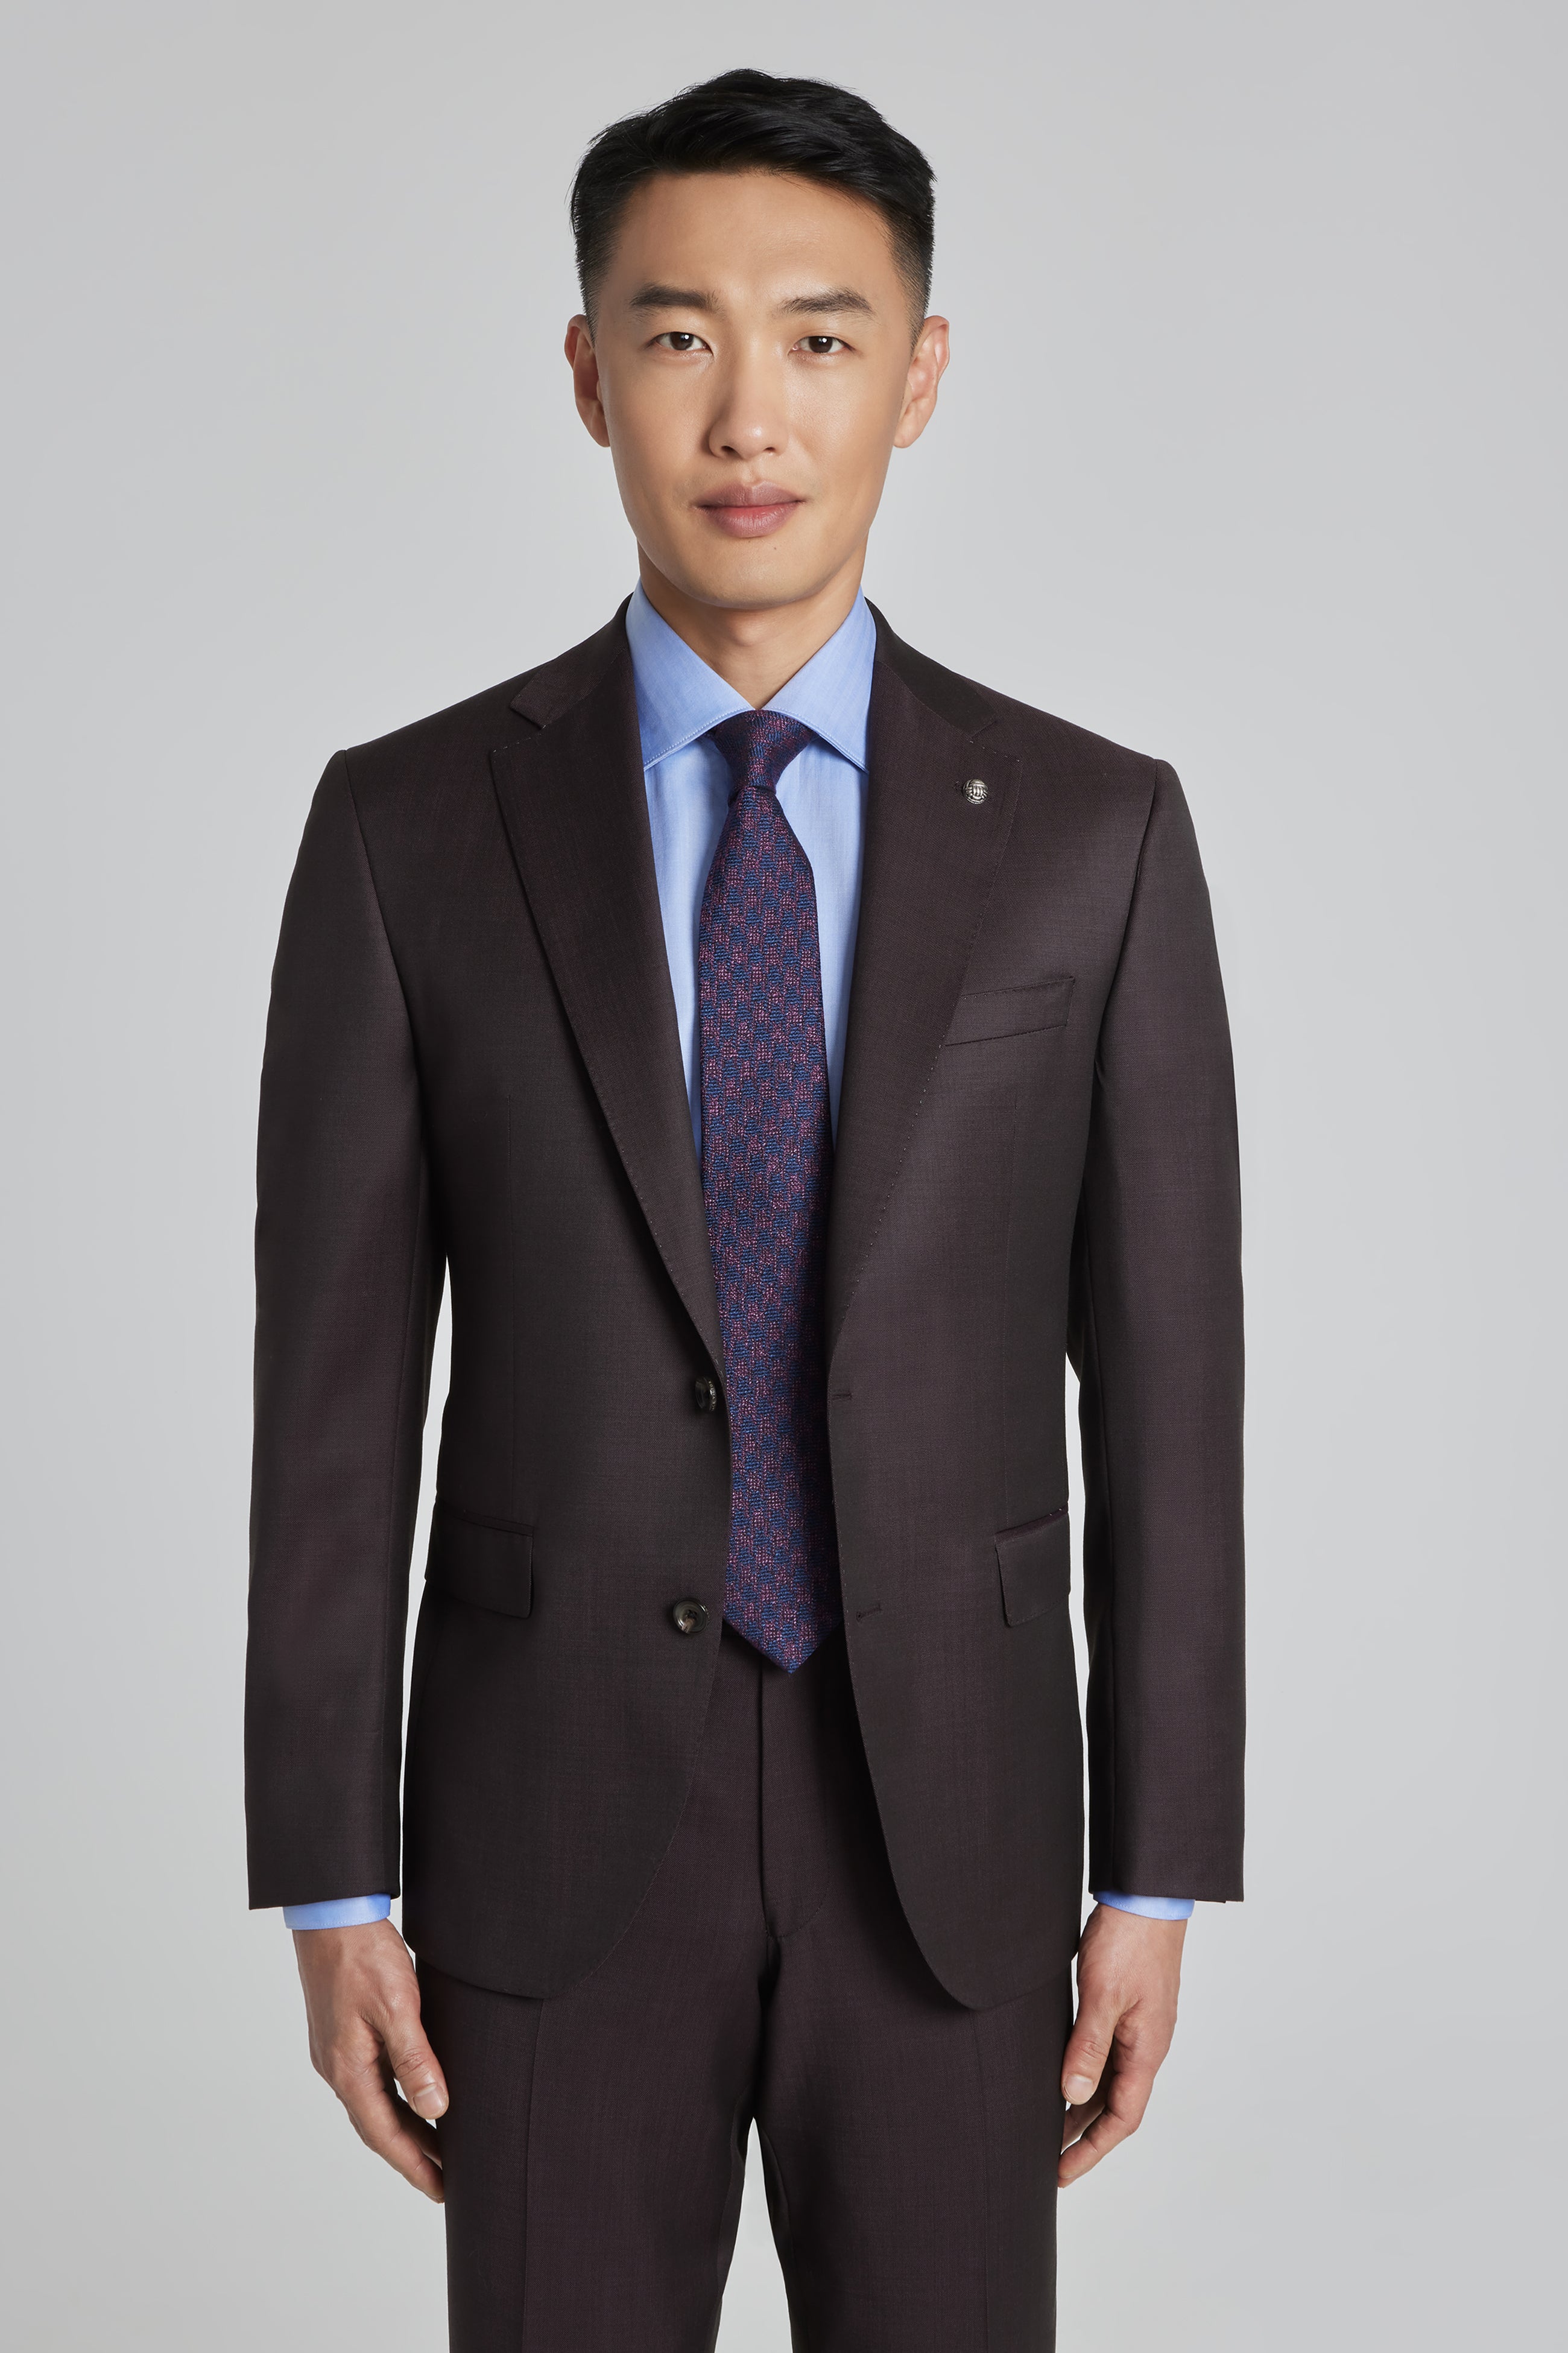 Esprit Burgundy Solid Super 120's Wool Suit